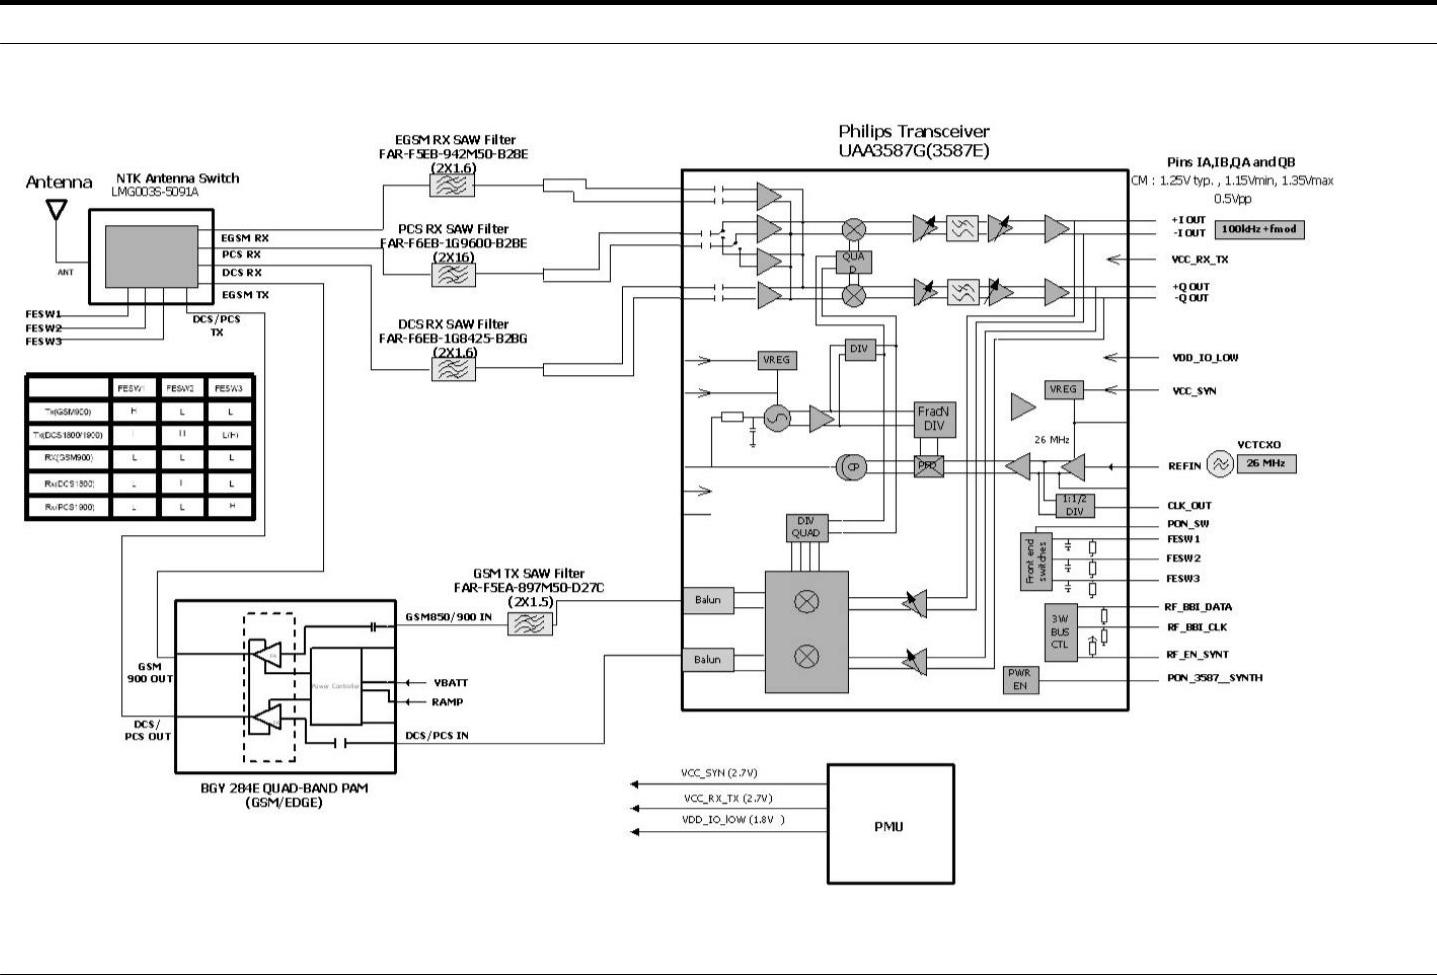 Samsung SGH-D500 Block Diagram